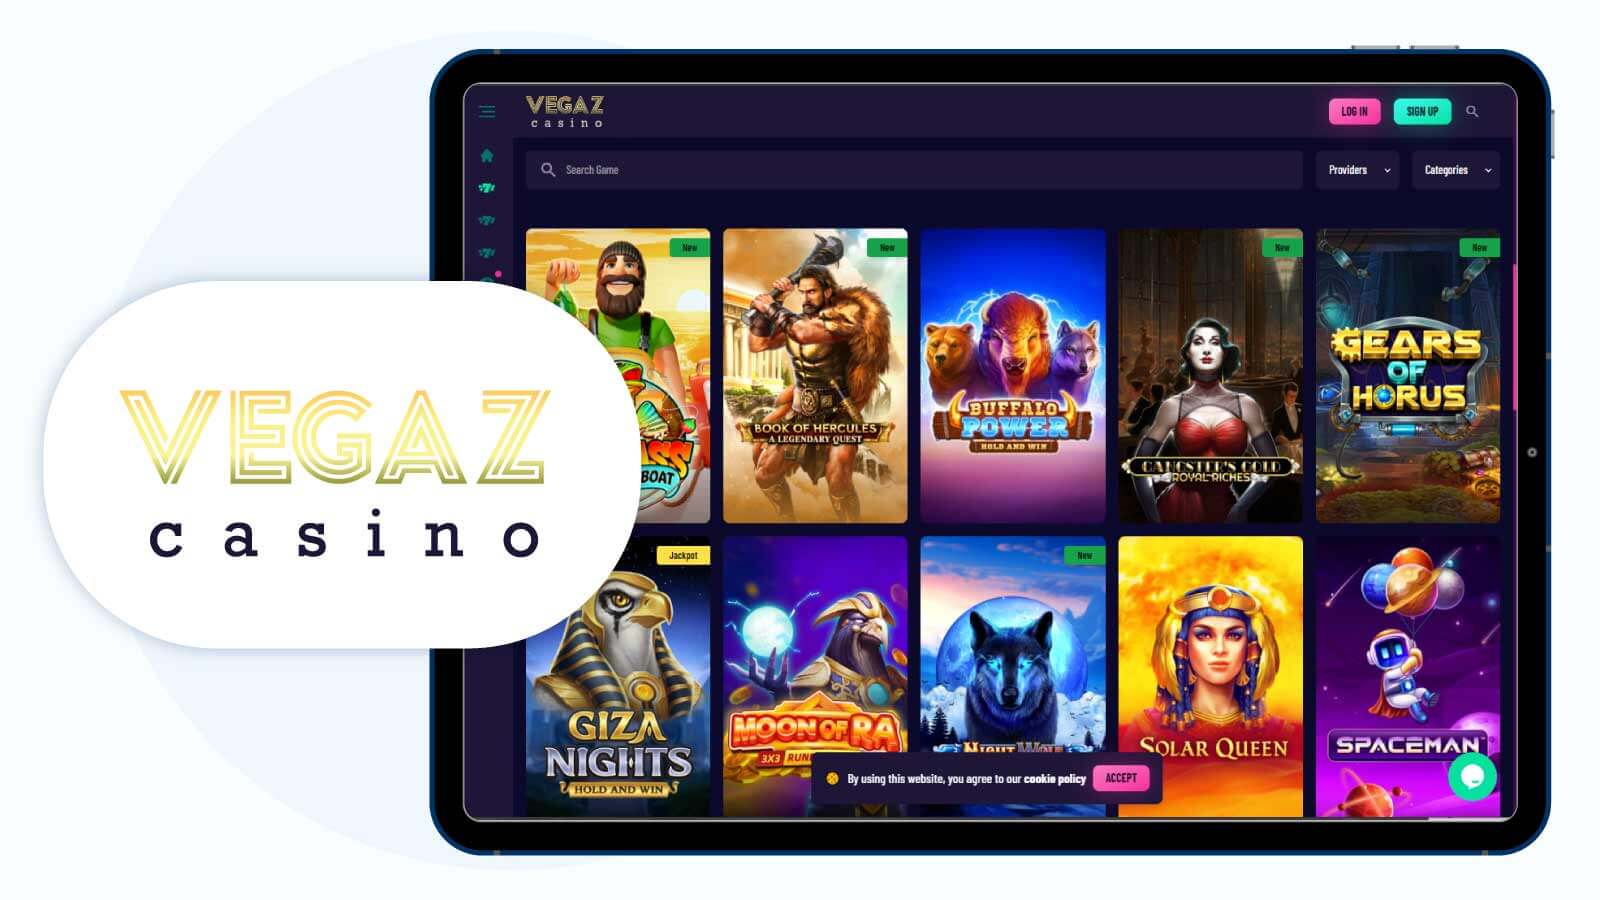 Vegaz Casino Outstanding $5 Minimum Deposit Casino for Slots